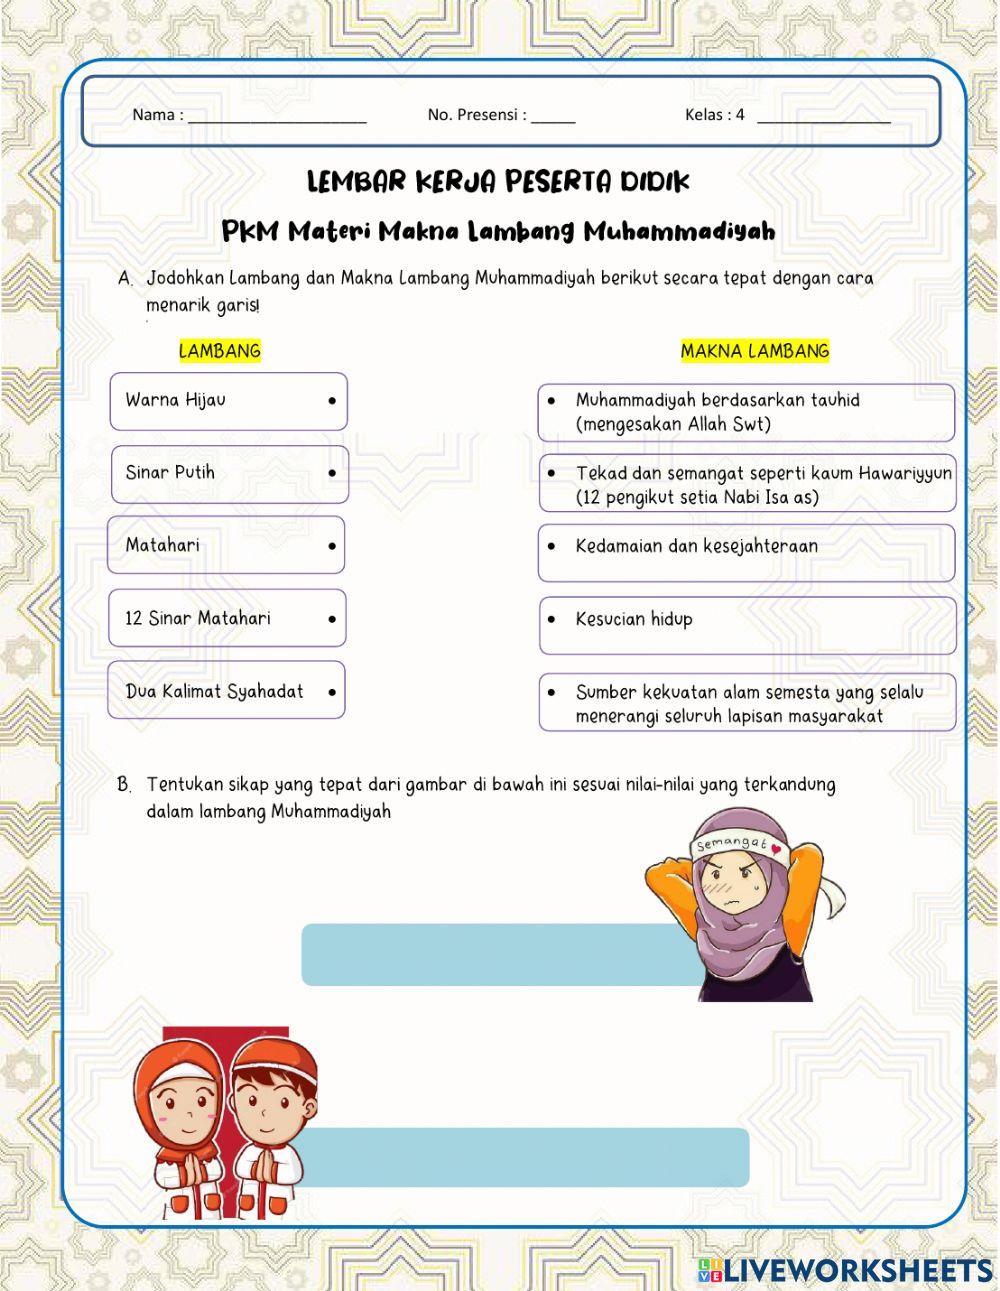 Latihan PKM - Makna Lambang Muhammadiyah